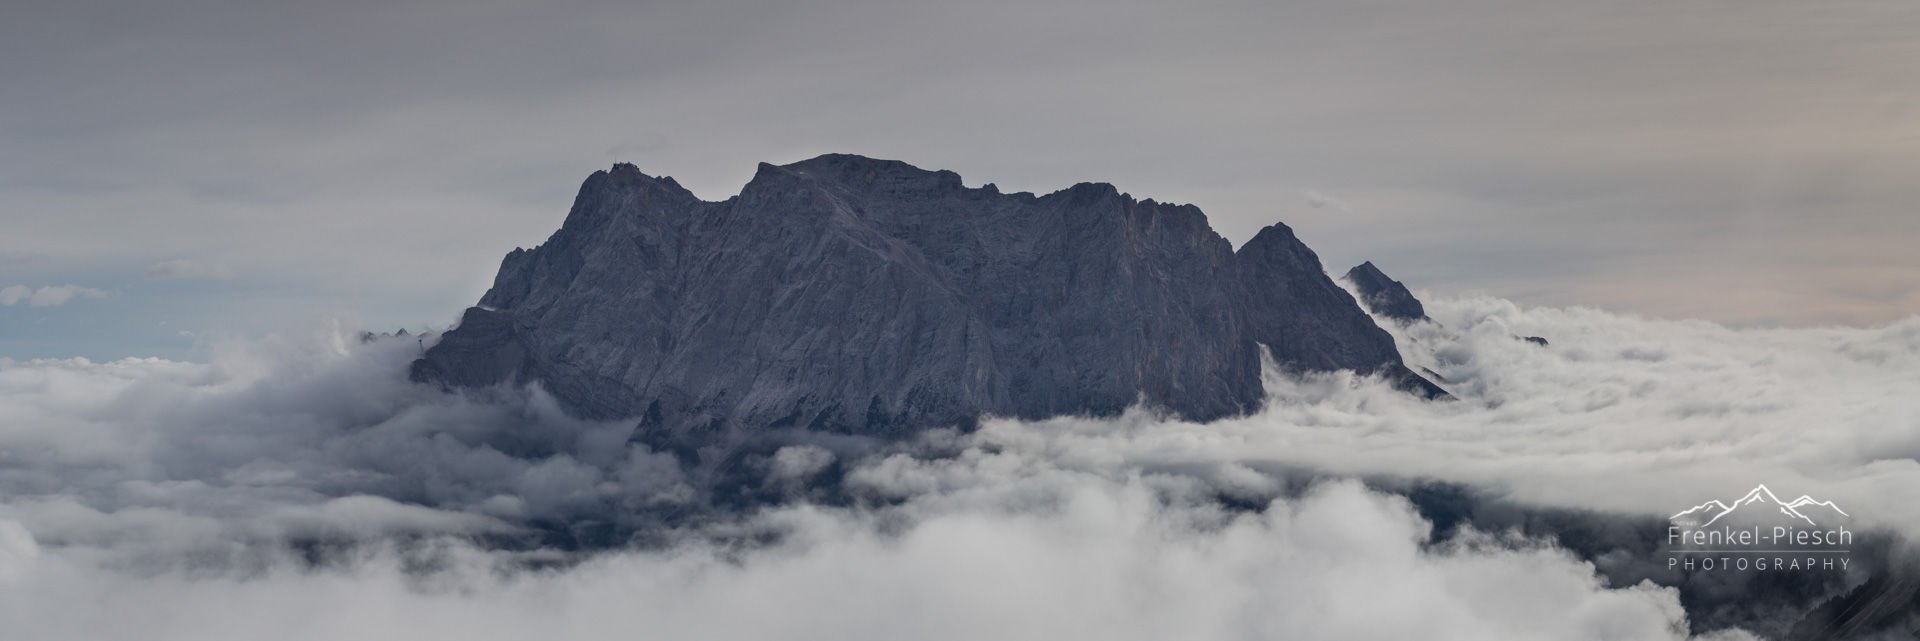 Bayrische Alpen I Andreas Frenkel-Piesch Photography